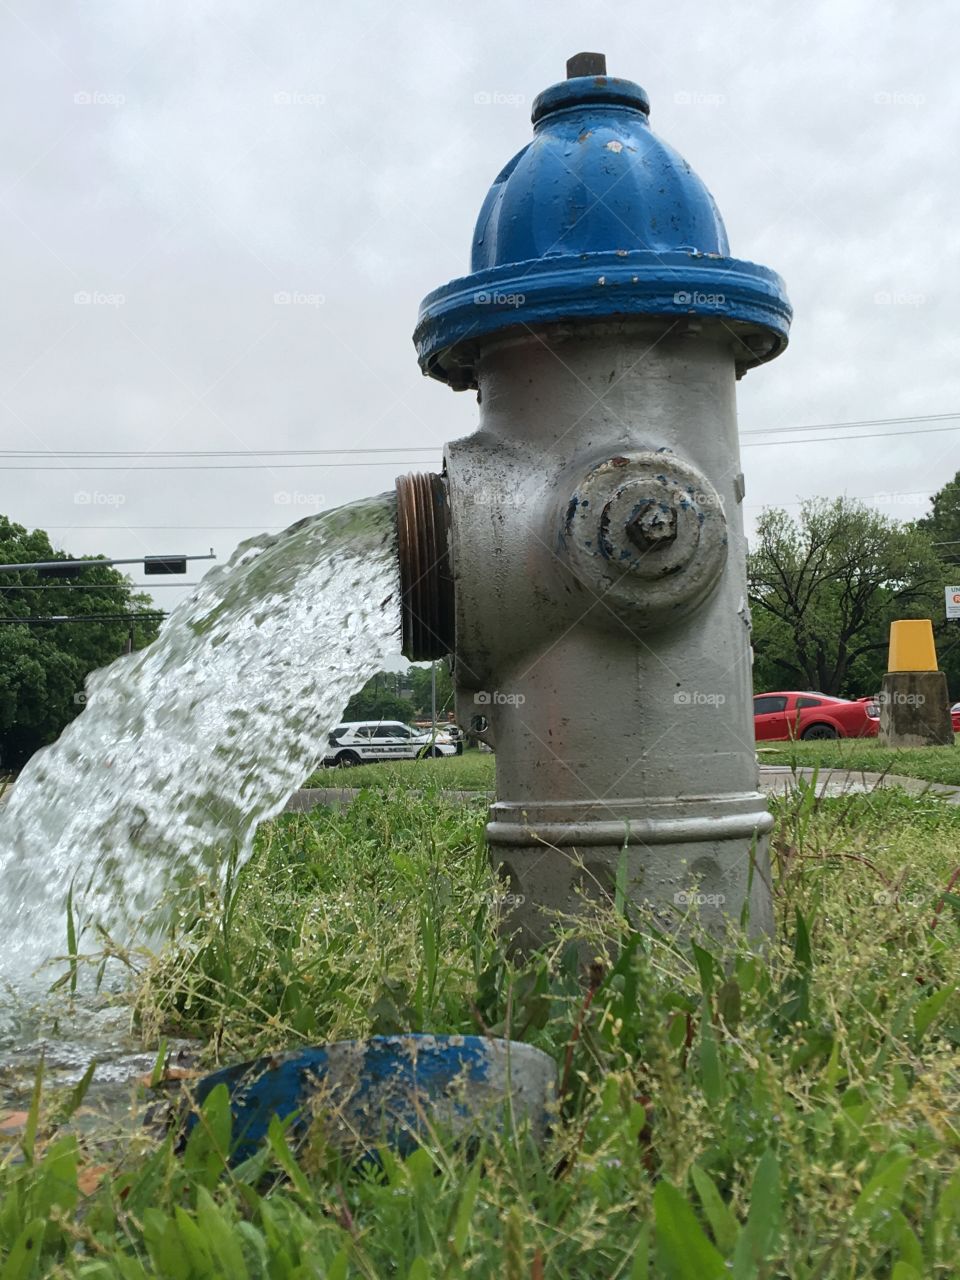 Broken fire hydrant